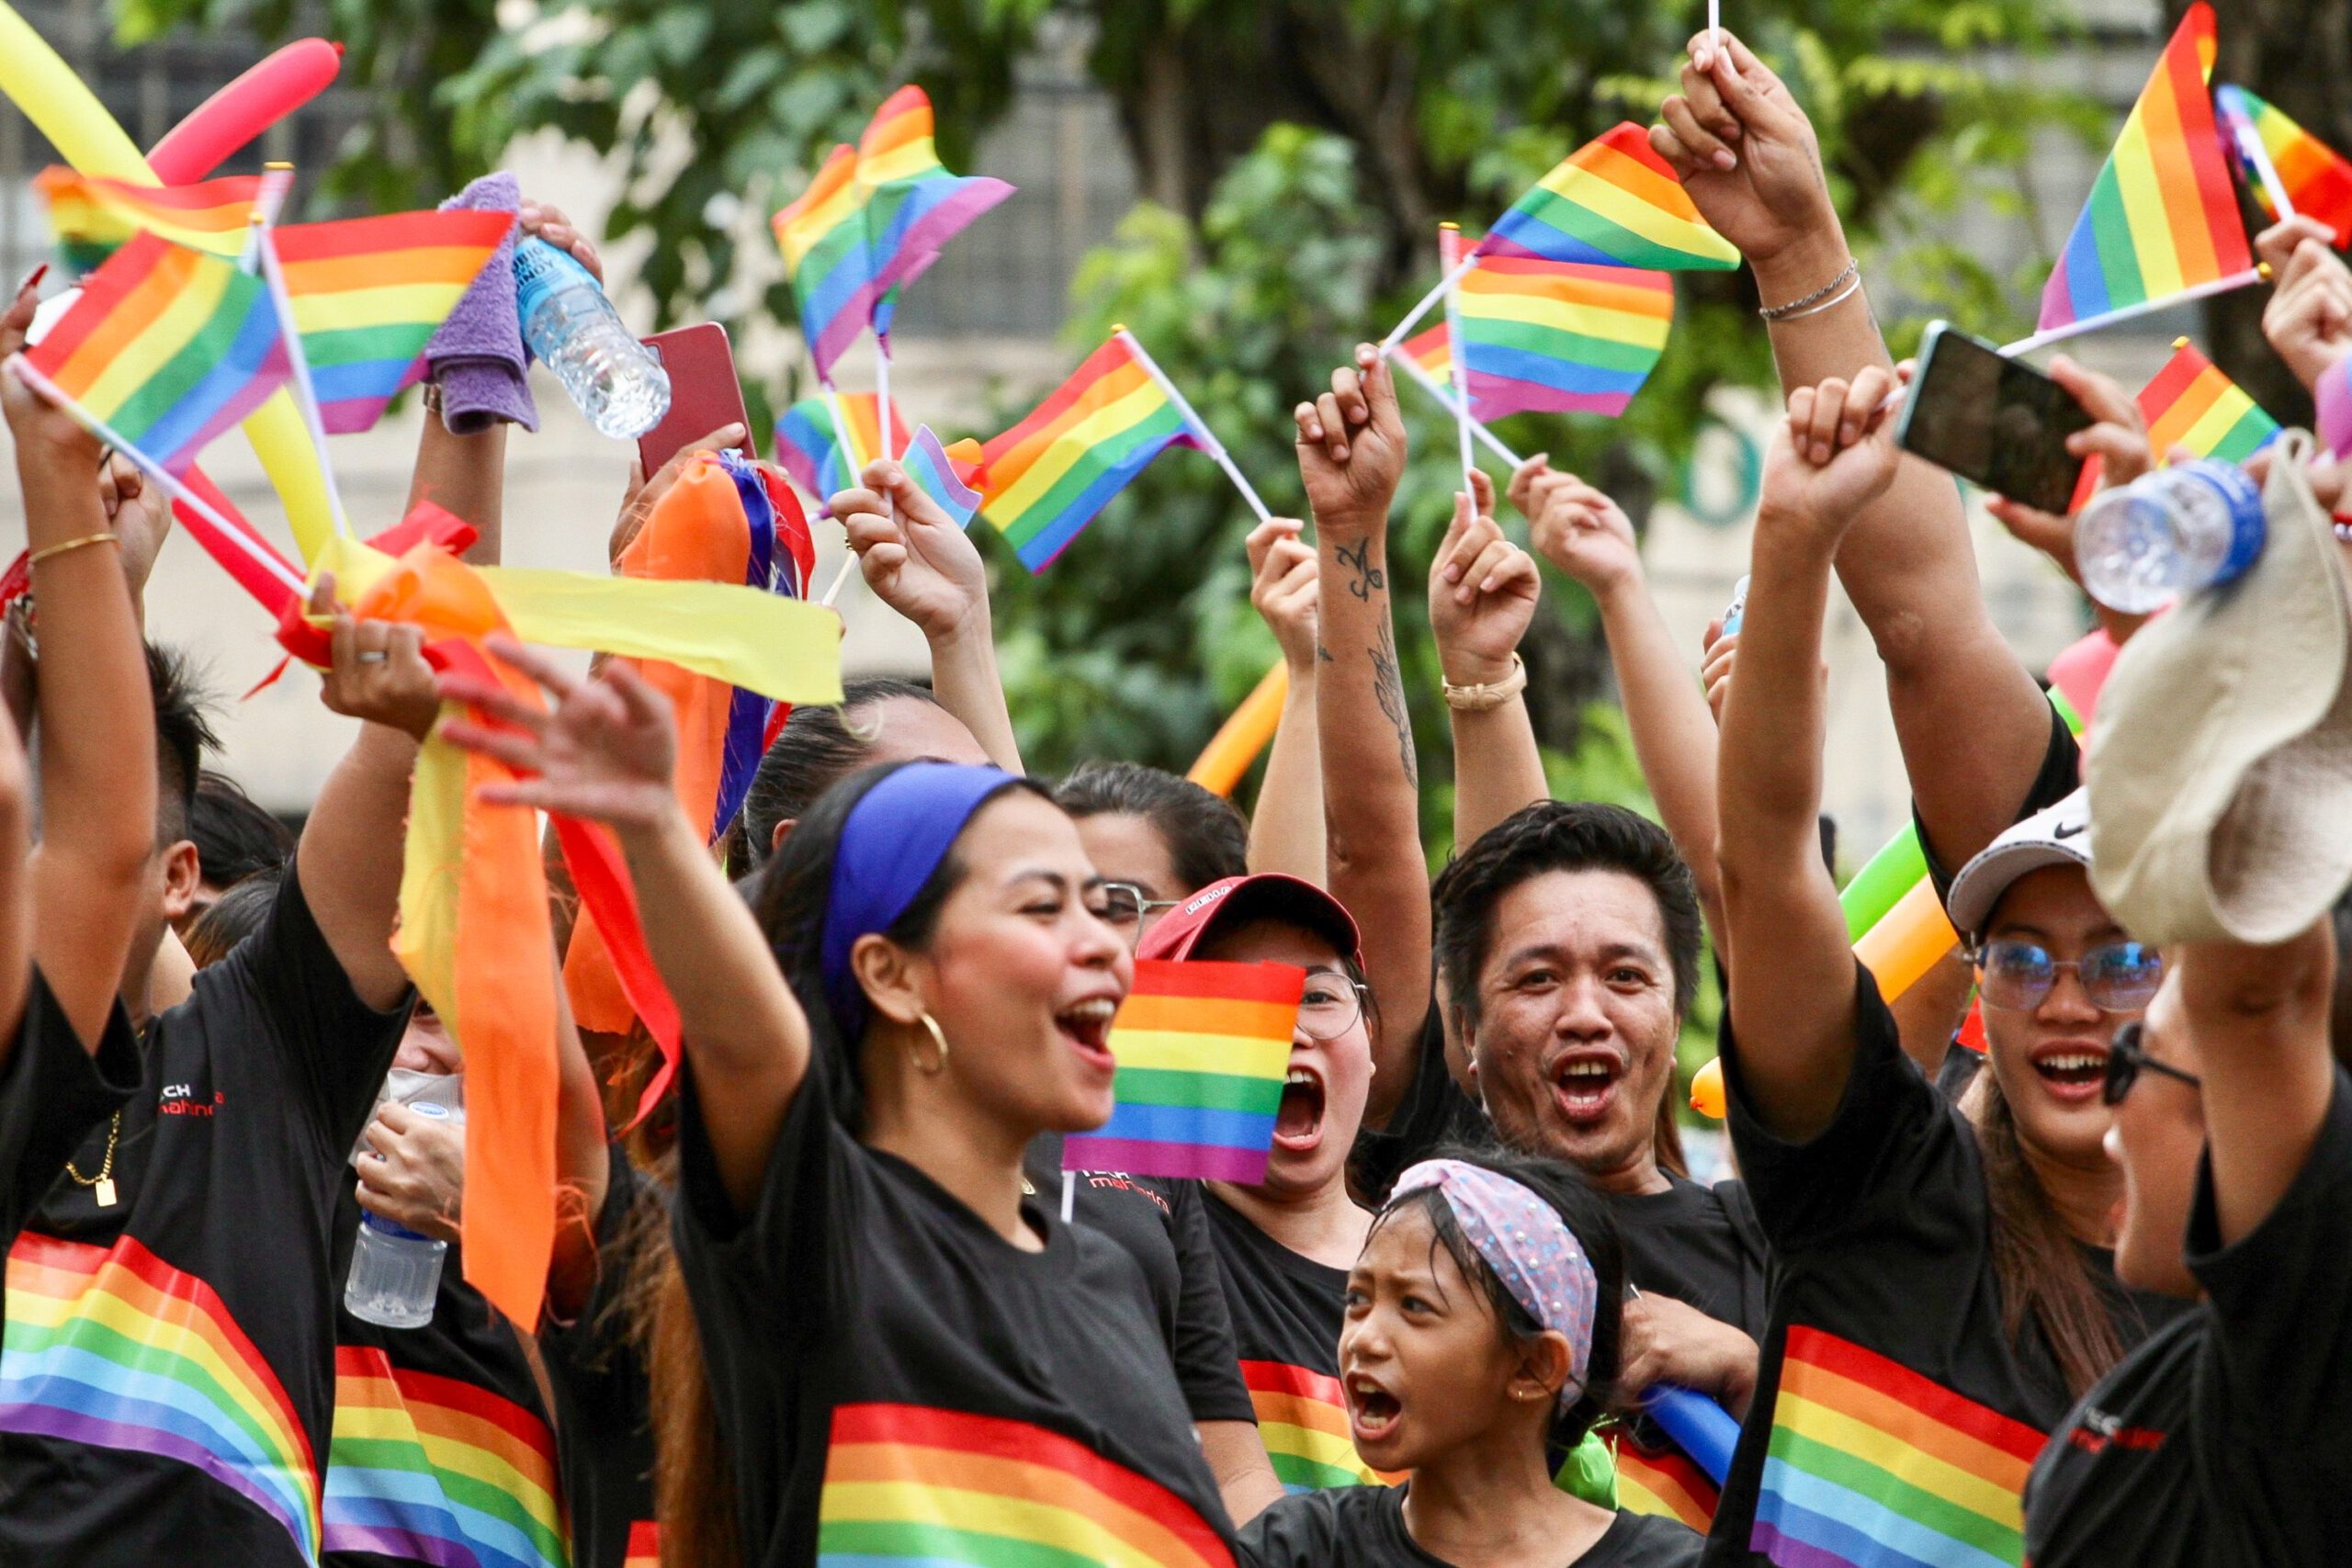 Lapu-Lapu’s new law provides strict protections vs LGBTQ+ discrimination